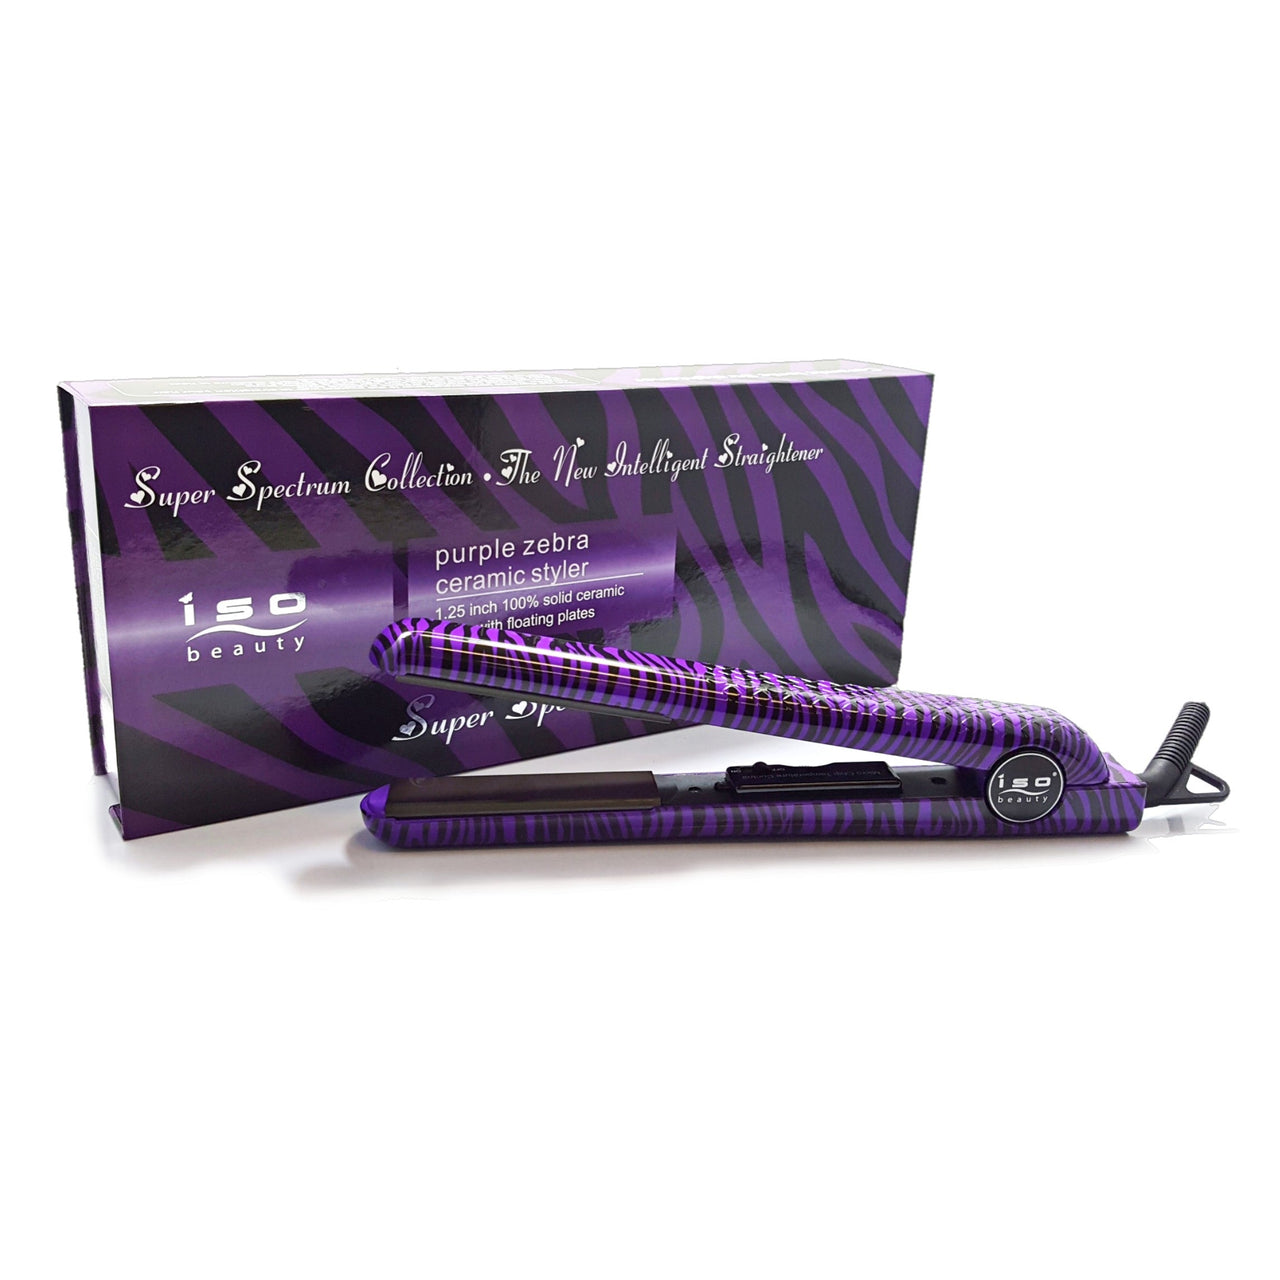 Limited Edition Purple Zebra 1.25" Ceramic Flat Iron Hair Straightener with Adjustable Temperature